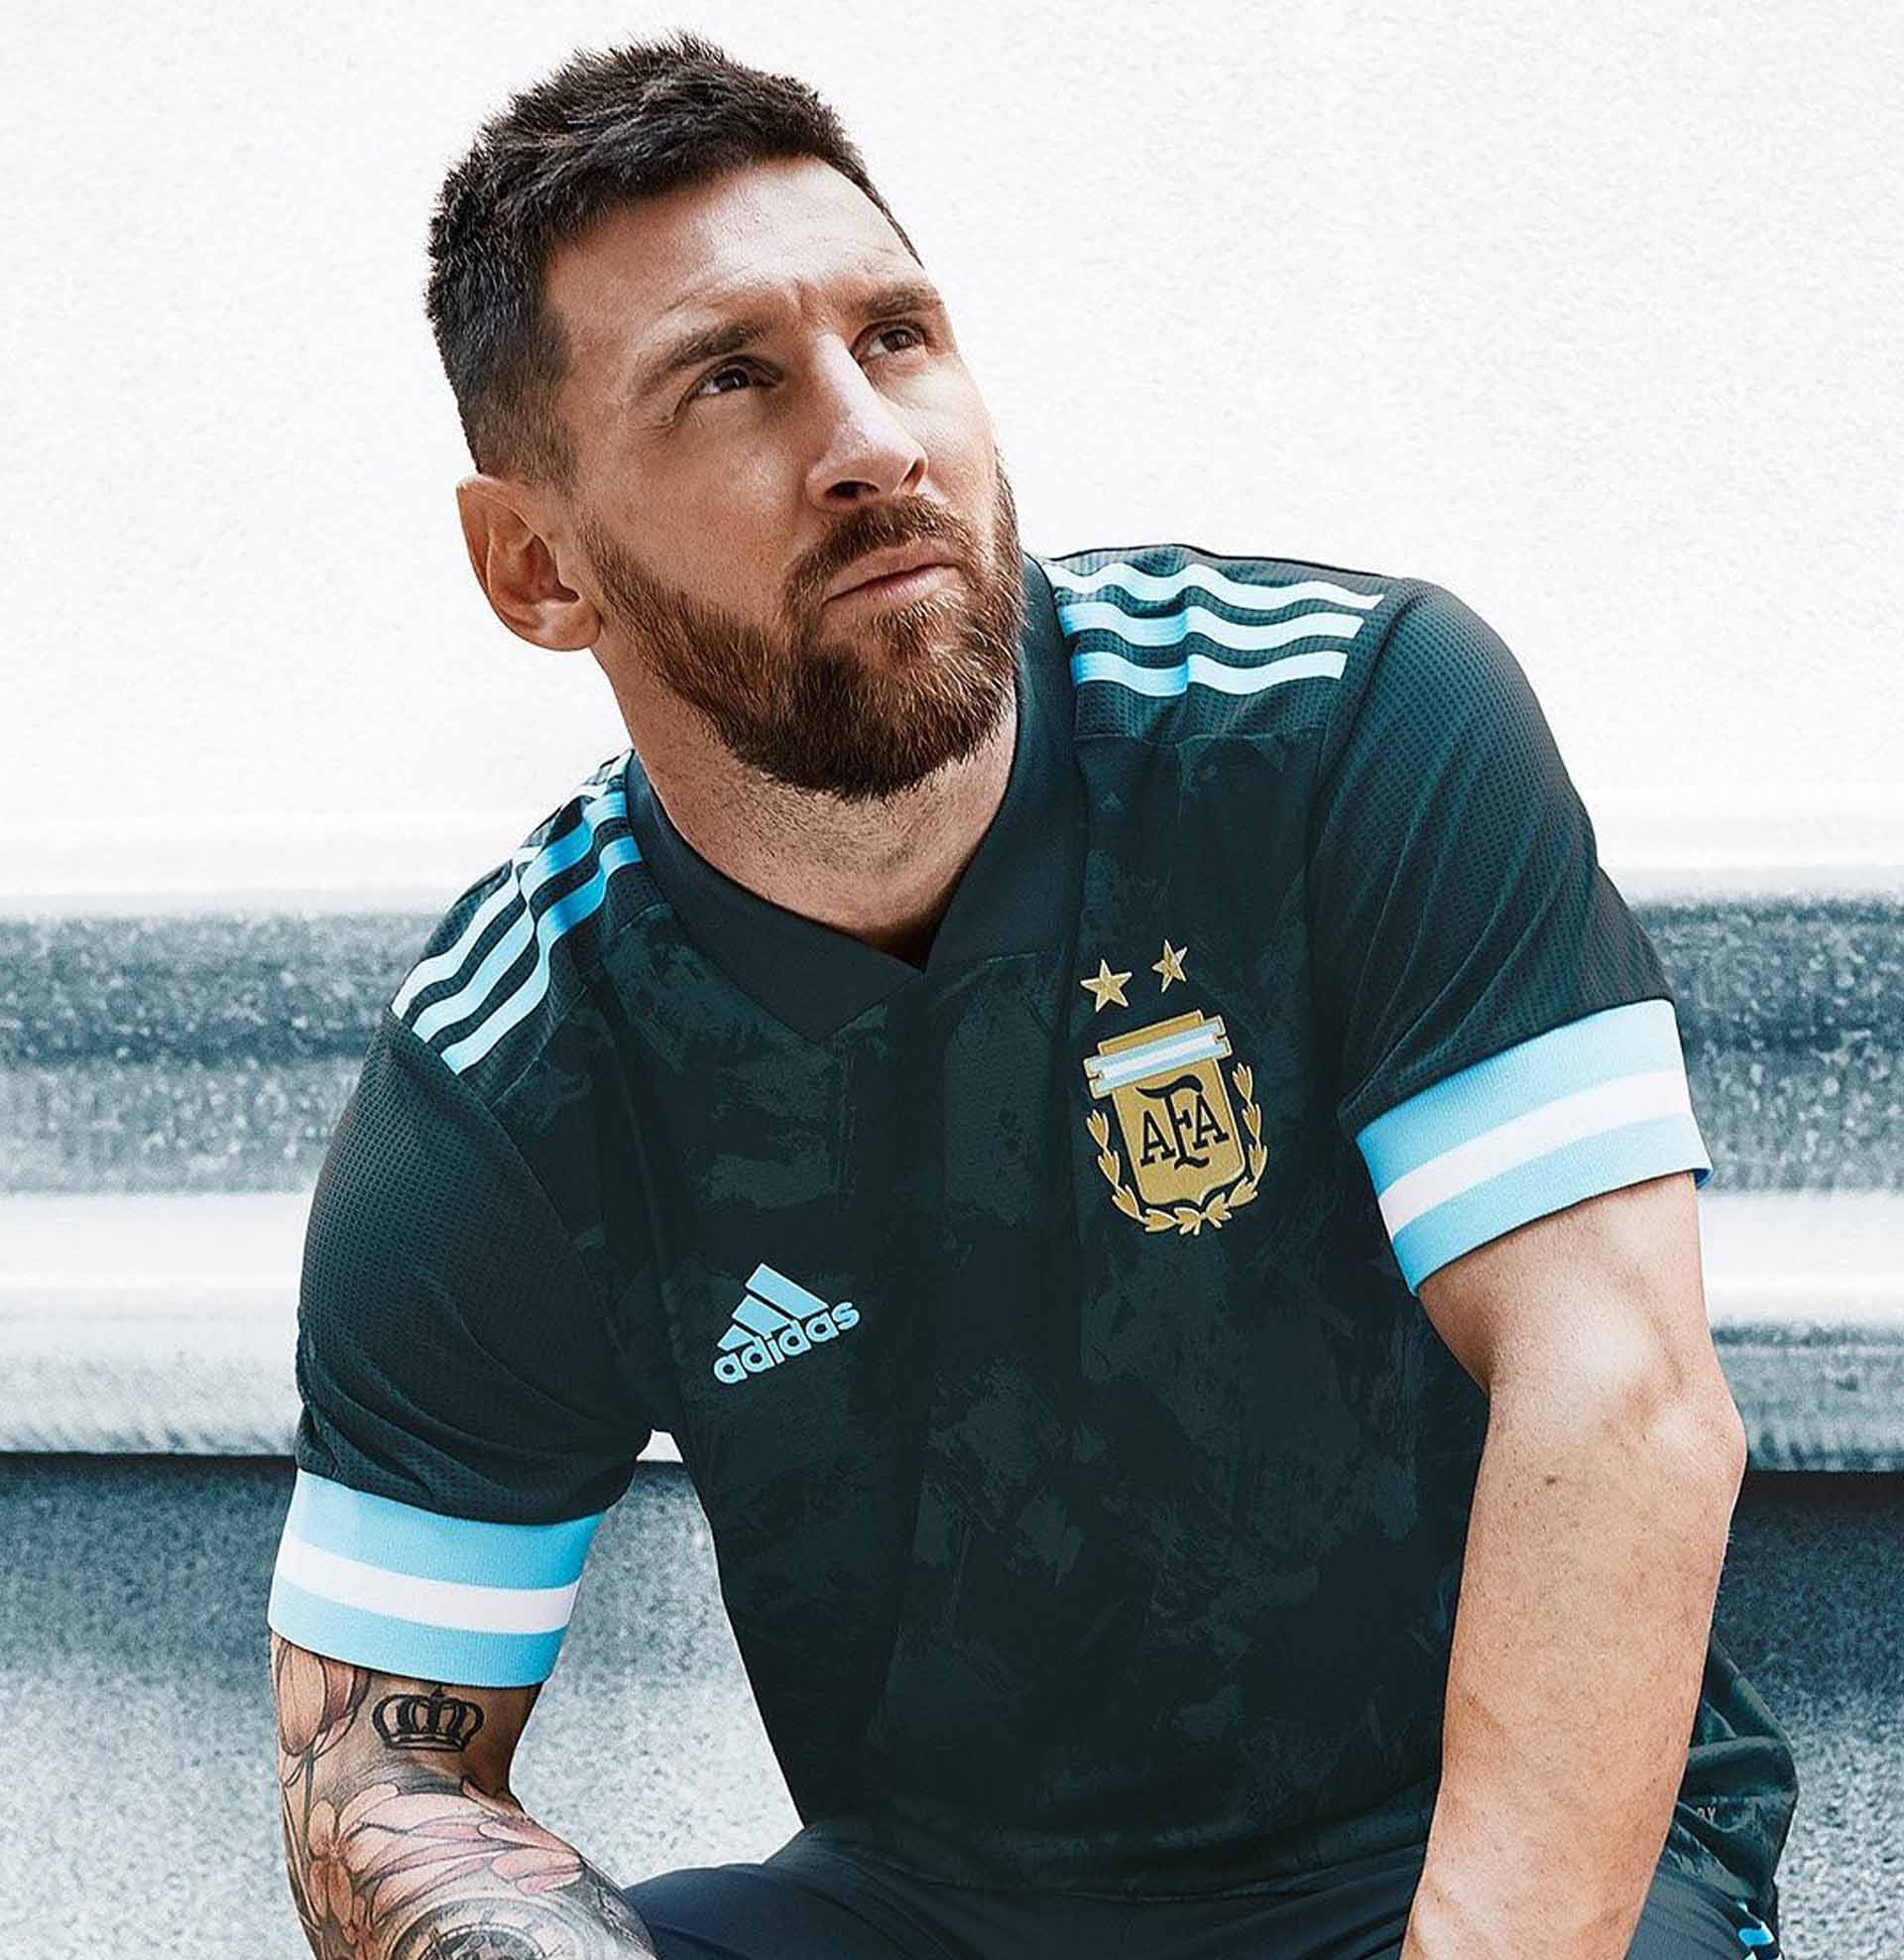 argentina futbol jersey